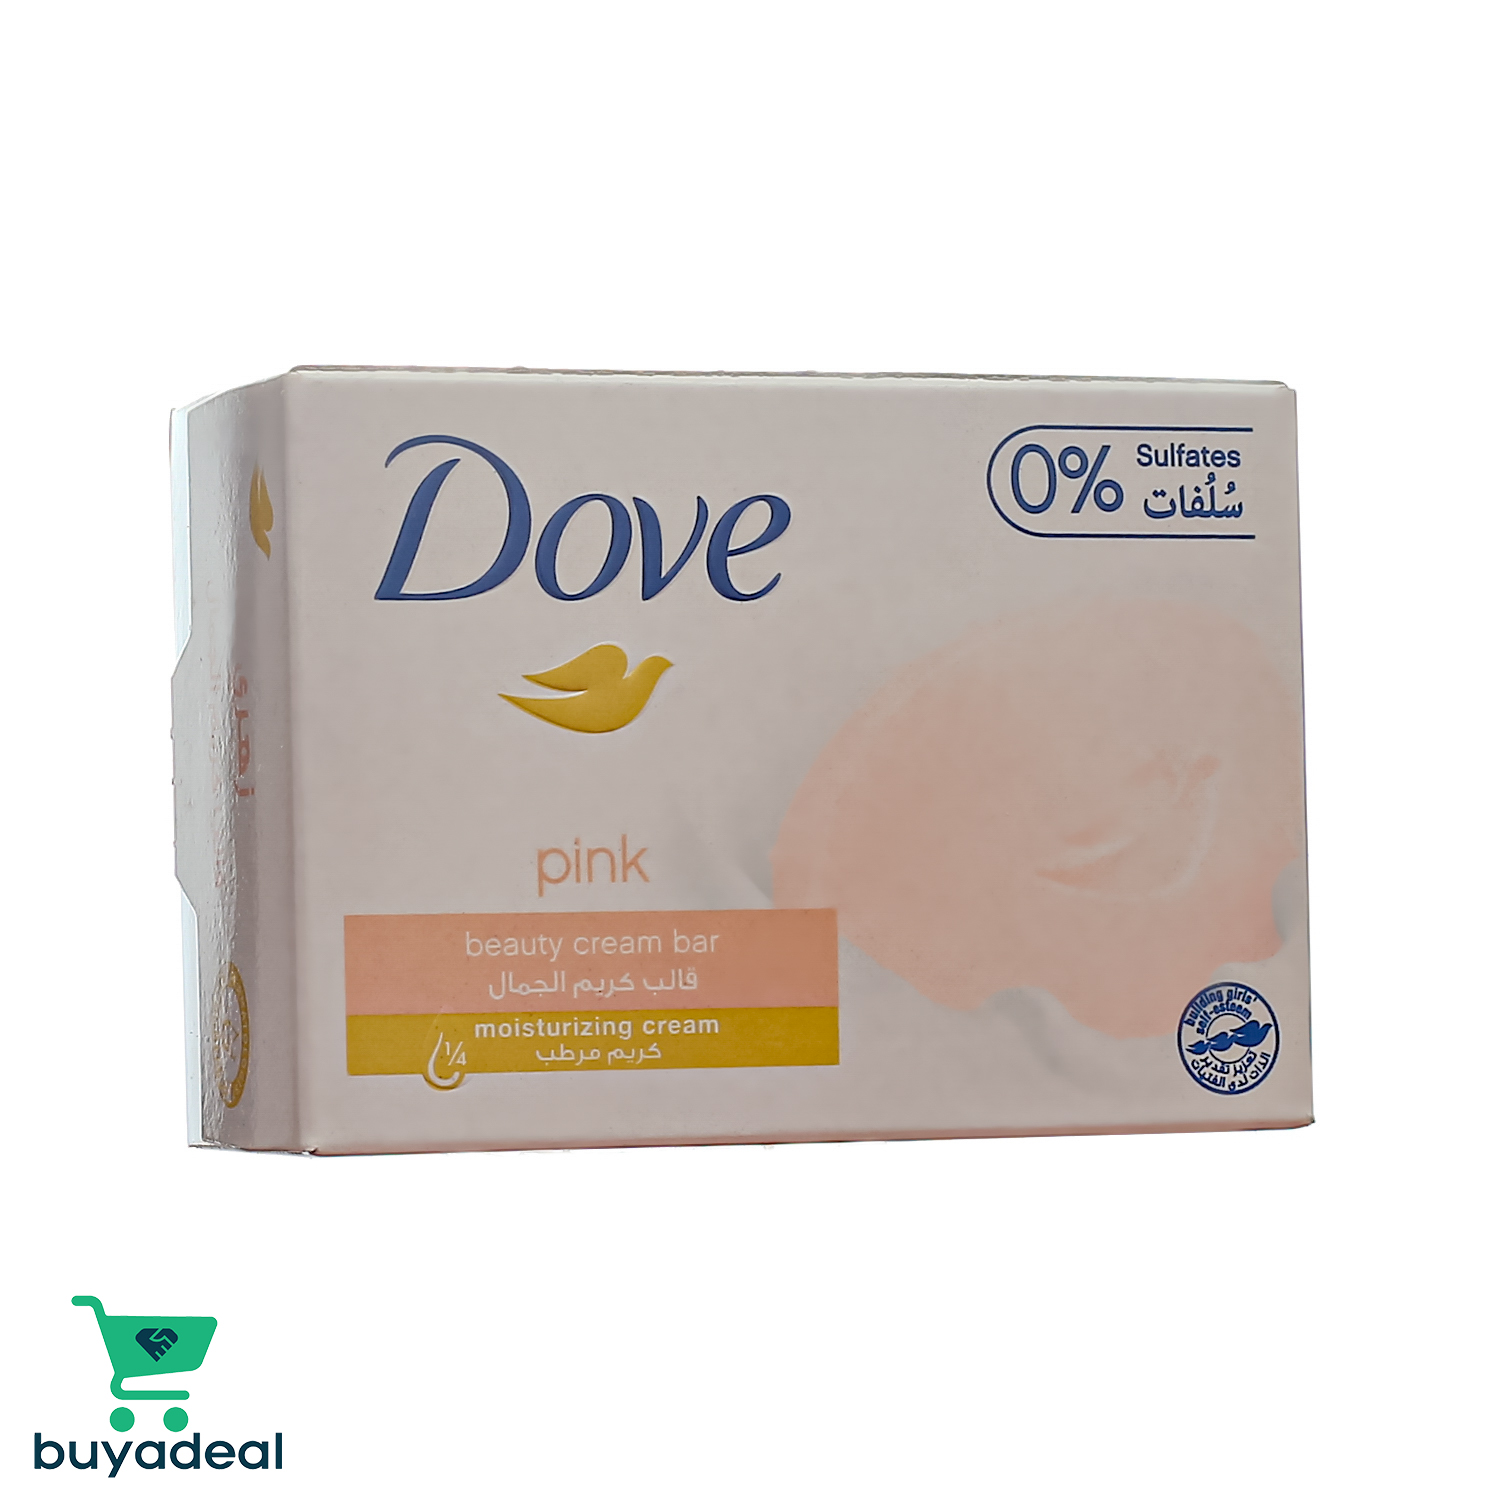 Buyadeal Product Dove Beauty Cream Bar Soaps, Pink/Rosa - 135g